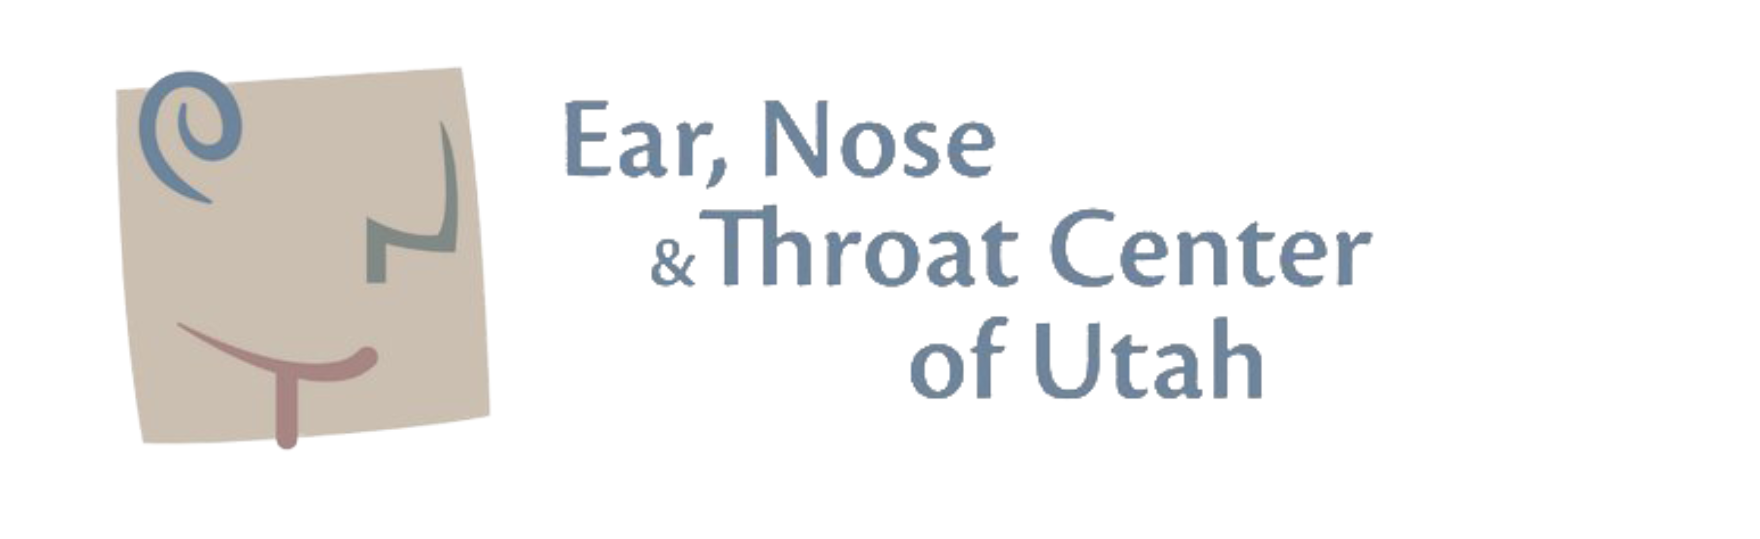 Ear, Nose & Throat Center of Utah Horizontal Logo